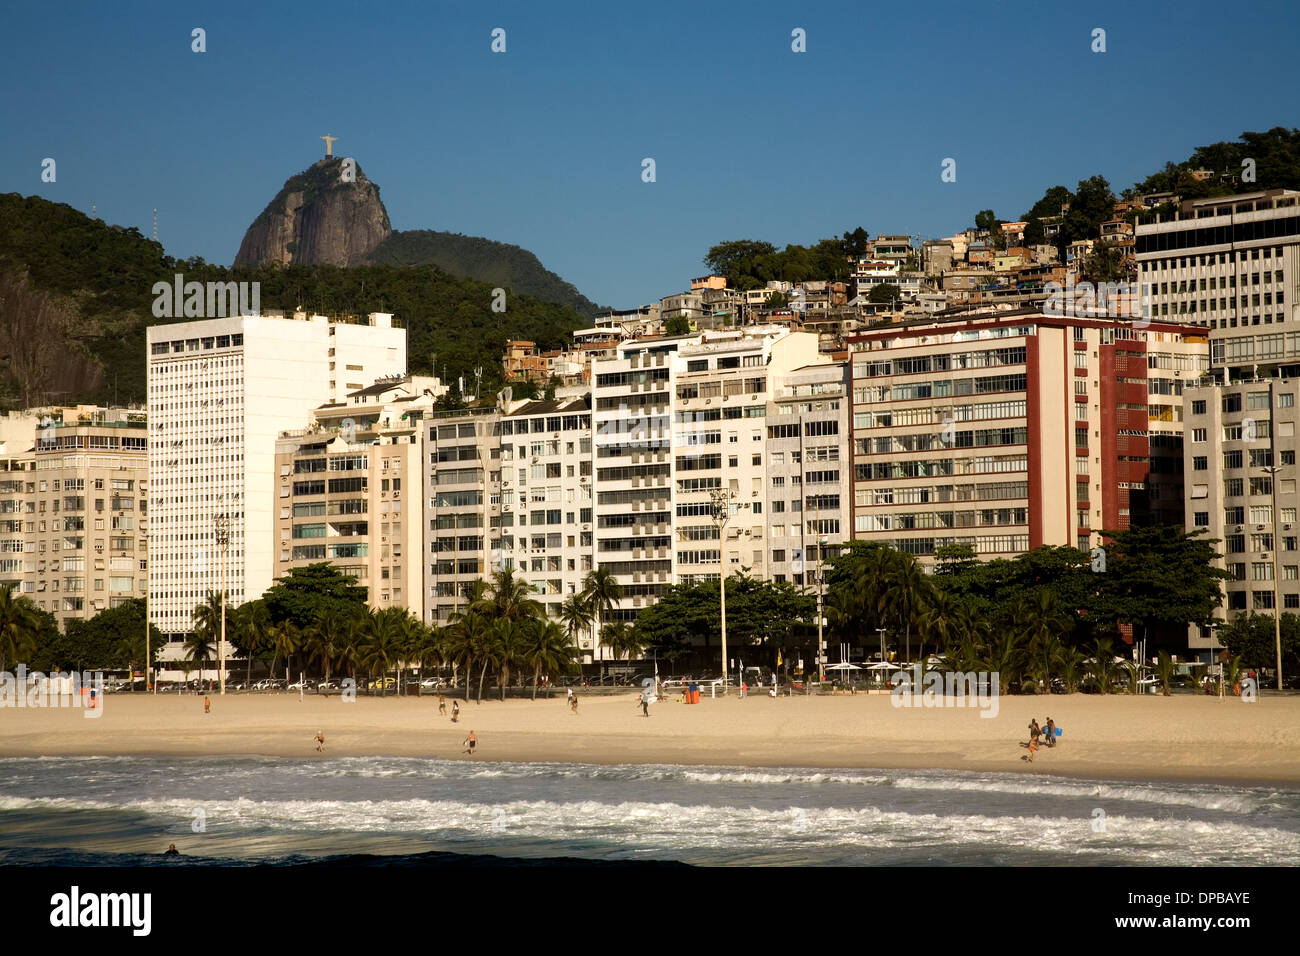 Spiaggia di Copacabana ed edifici con vista di favela e Cristo redentore (Corcovado) in background. Rio de Janeiro in Brasile. Foto Stock